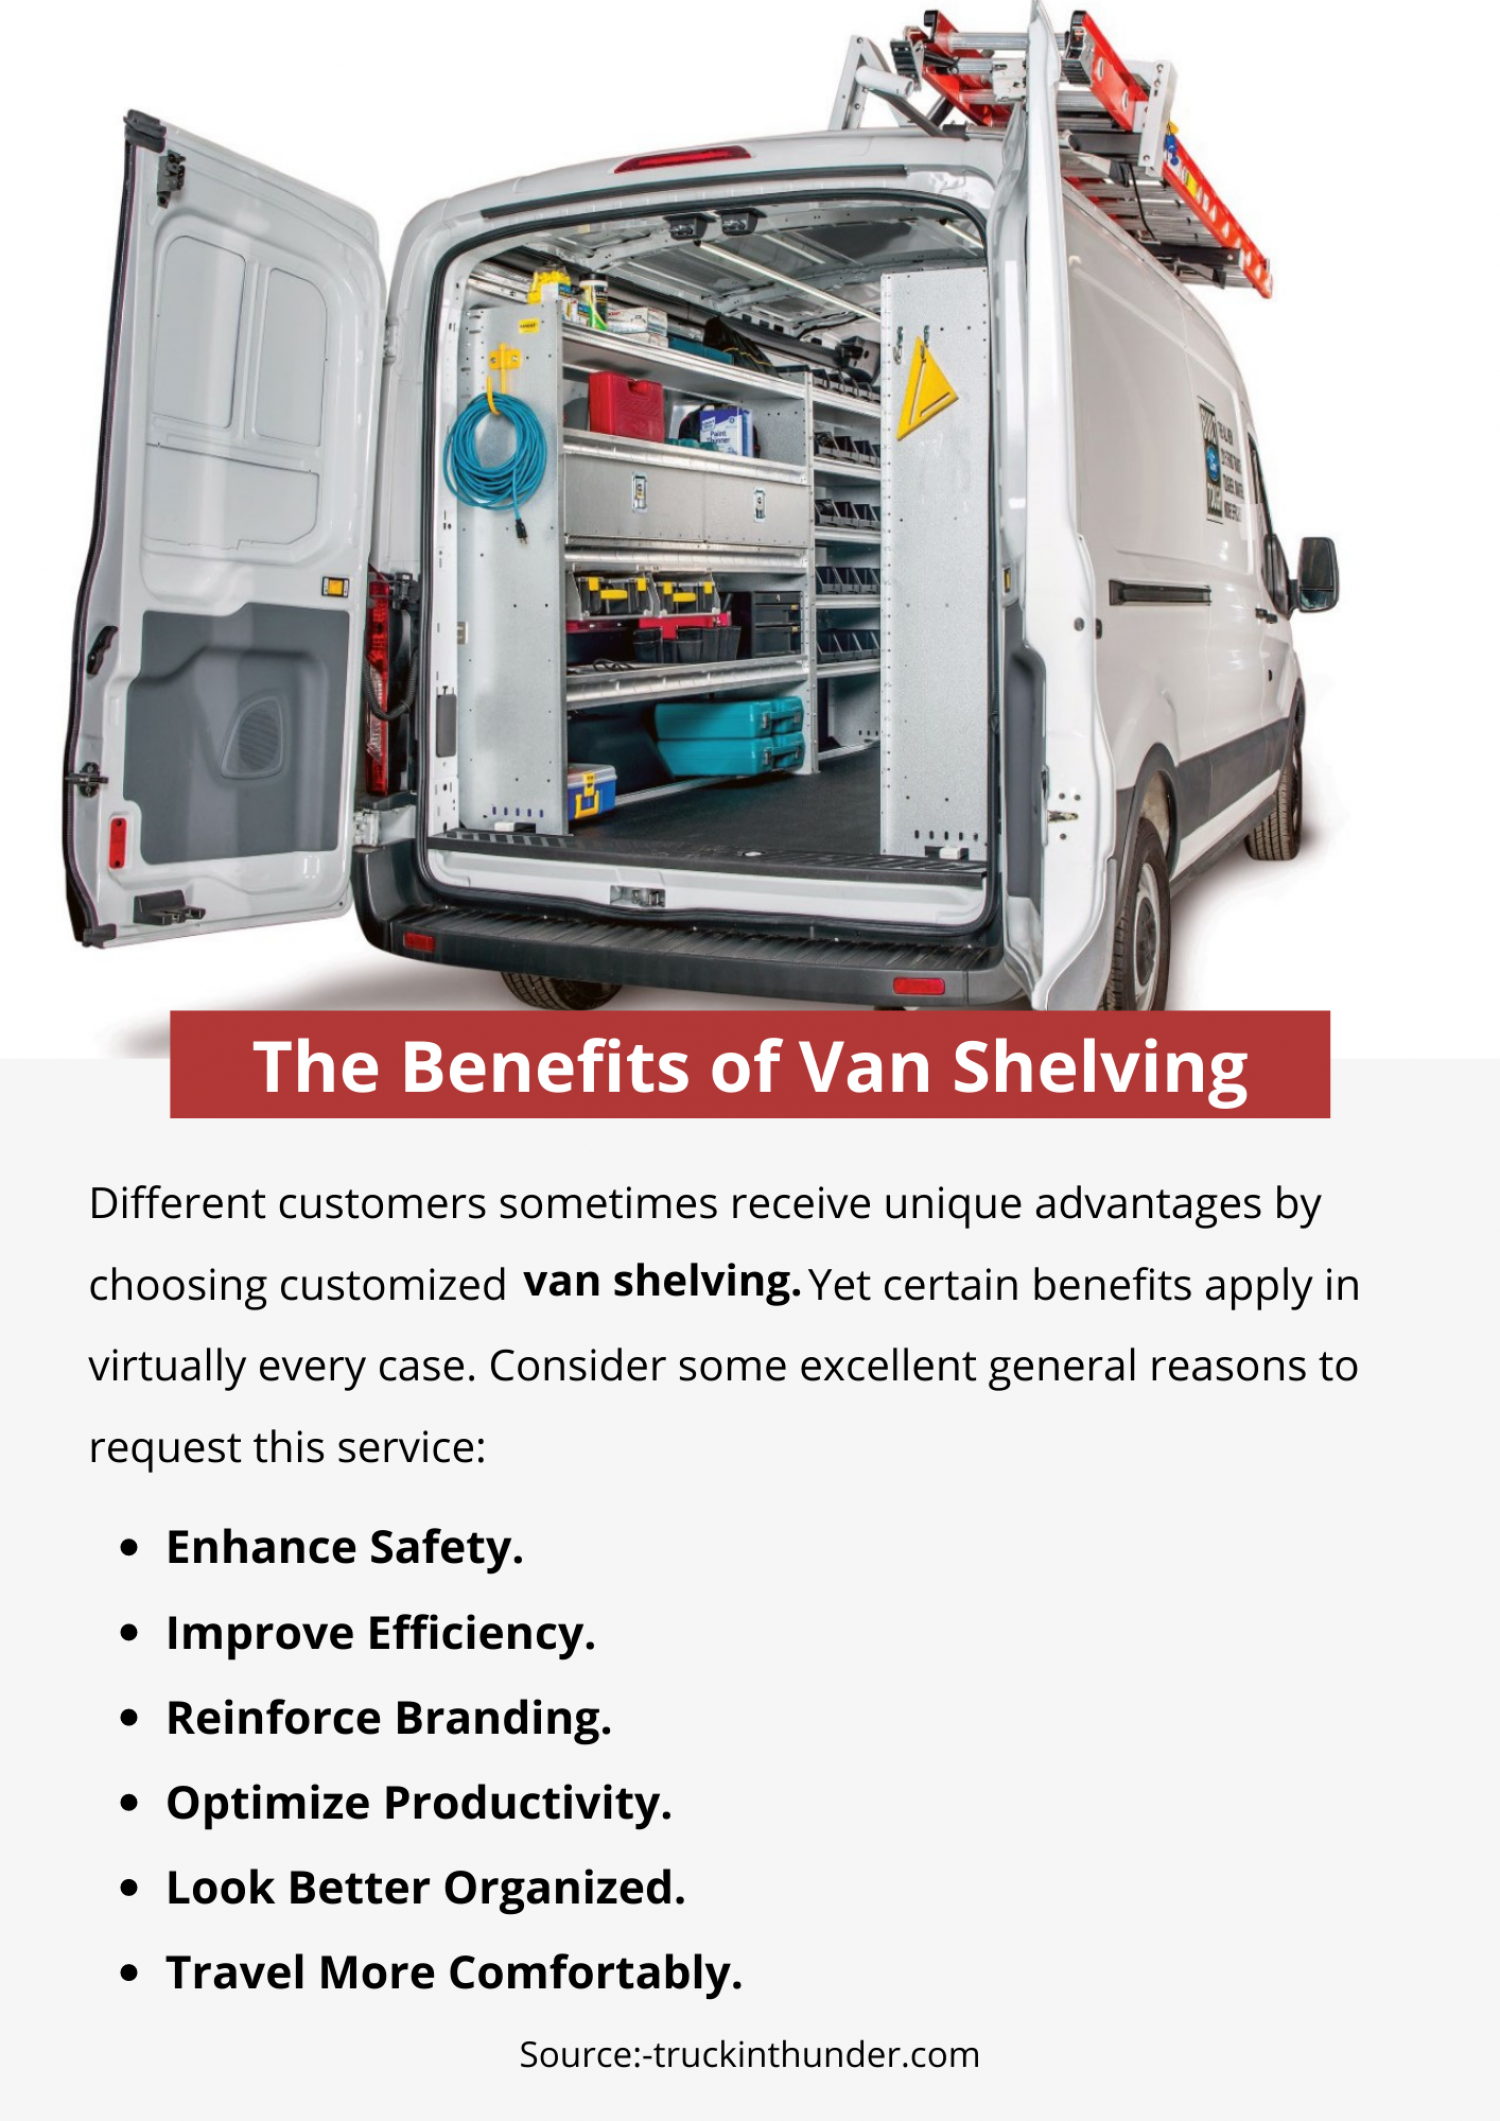 The Benefits of Van Shelving Infographic